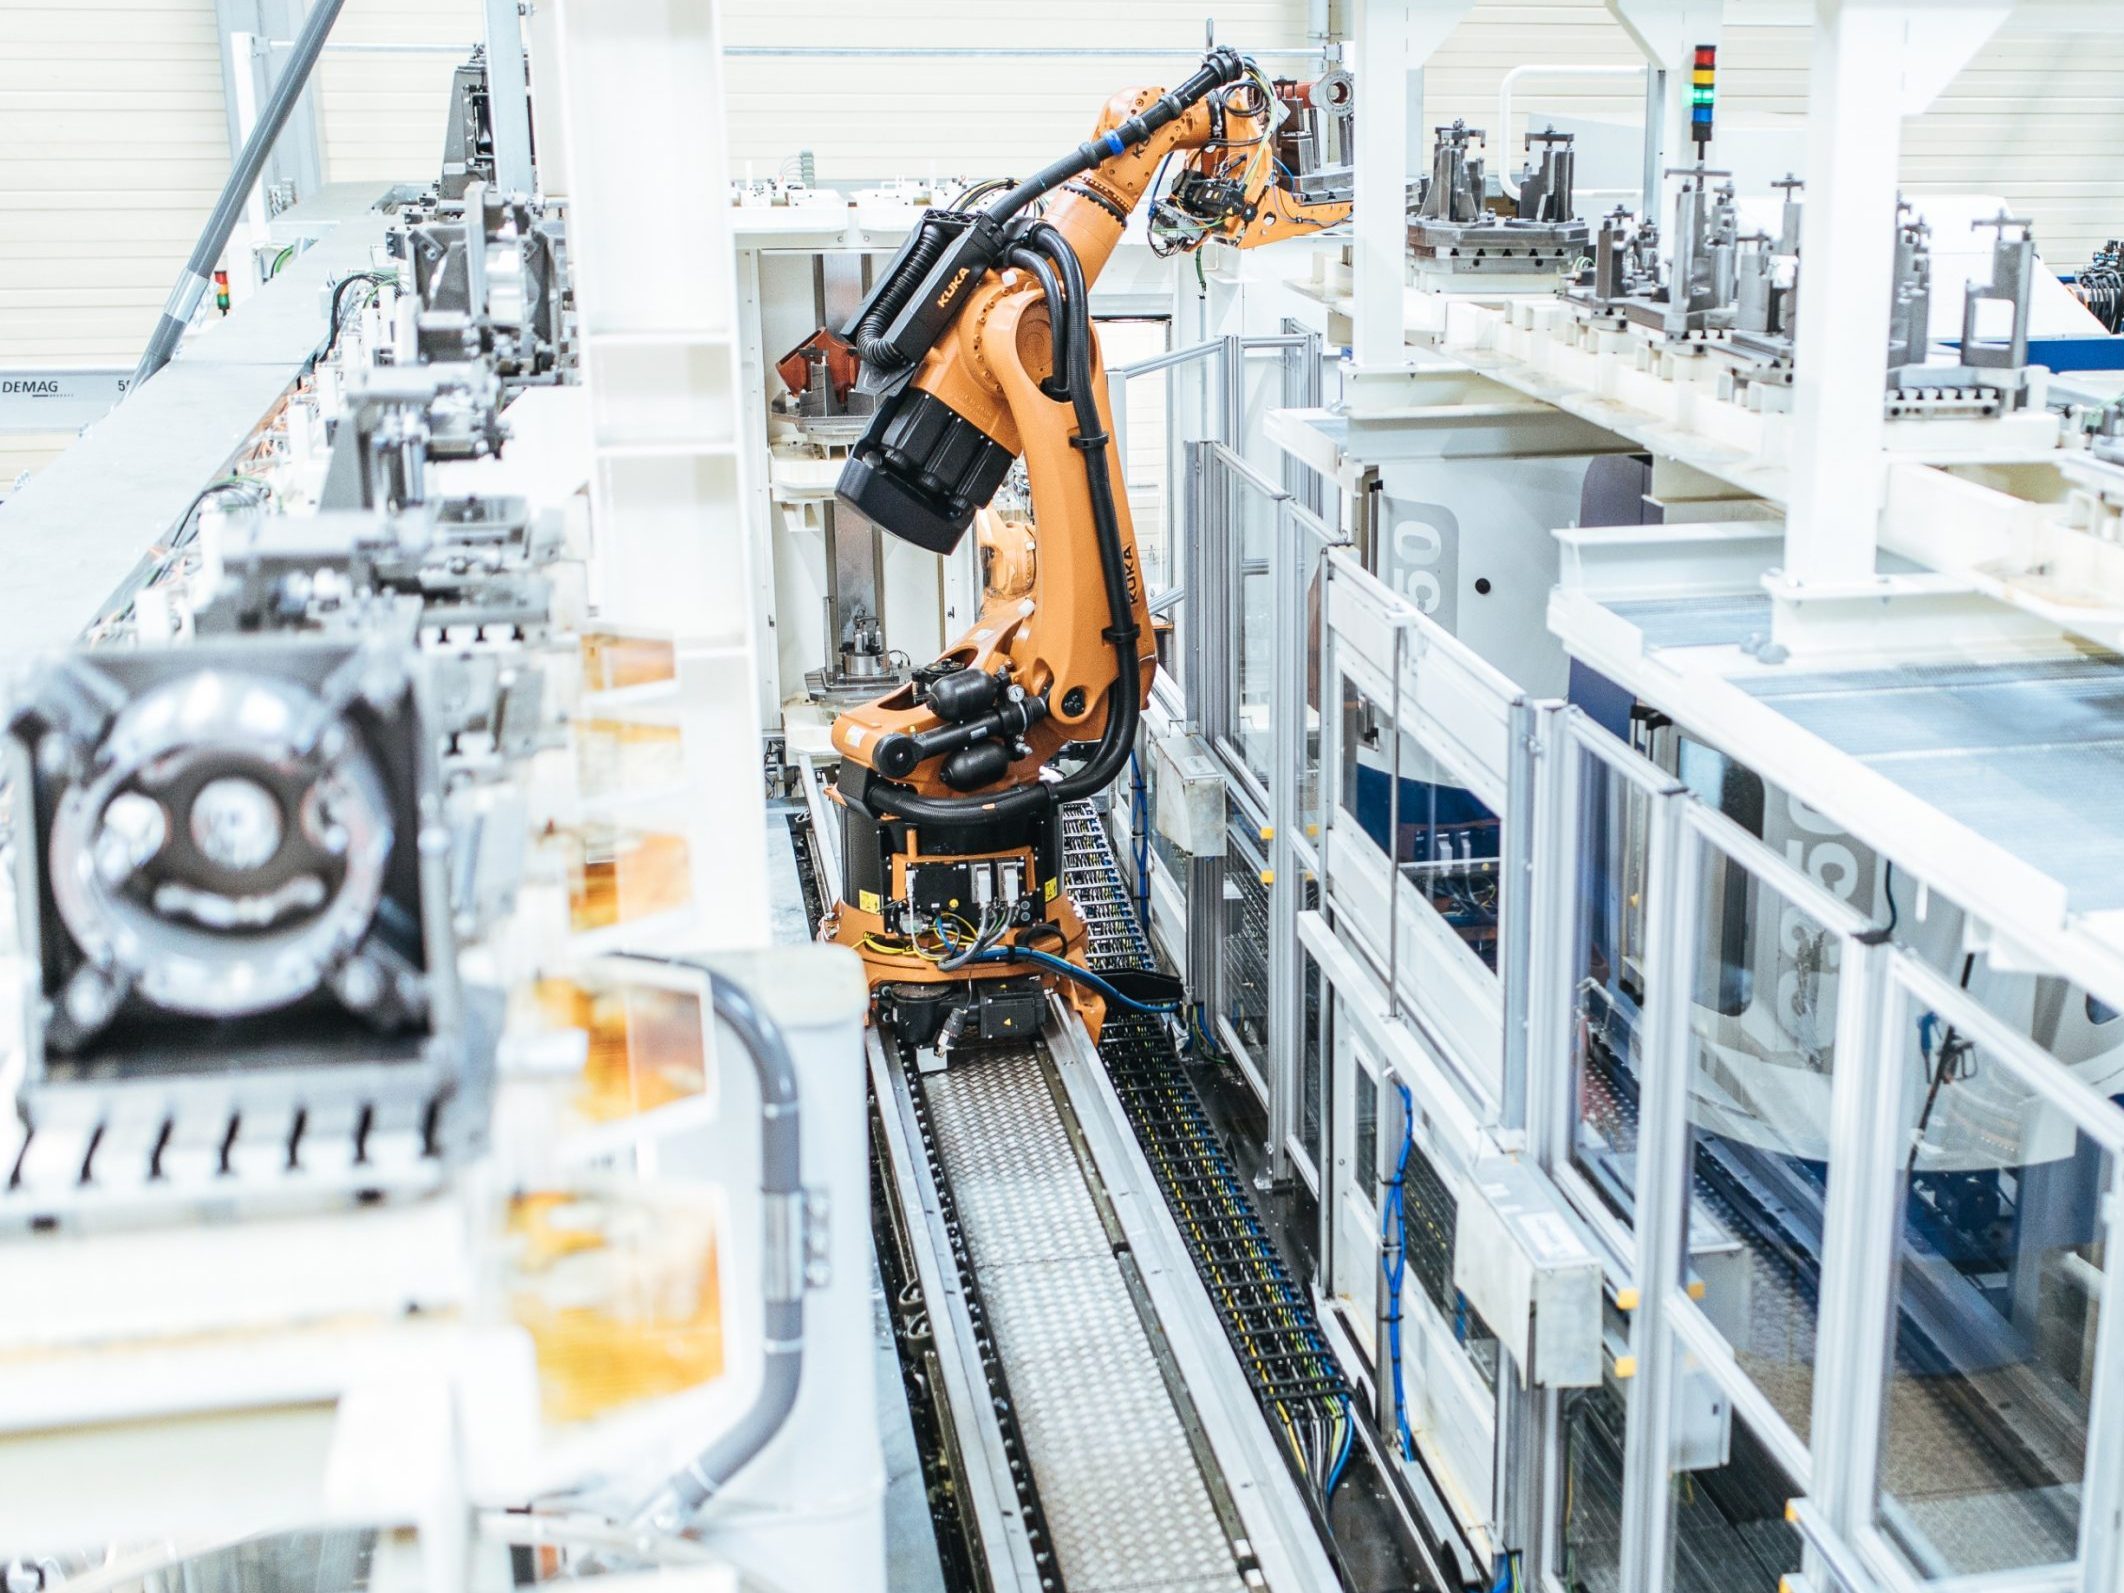 Industrie 4.0 mit Kuka-Roboter